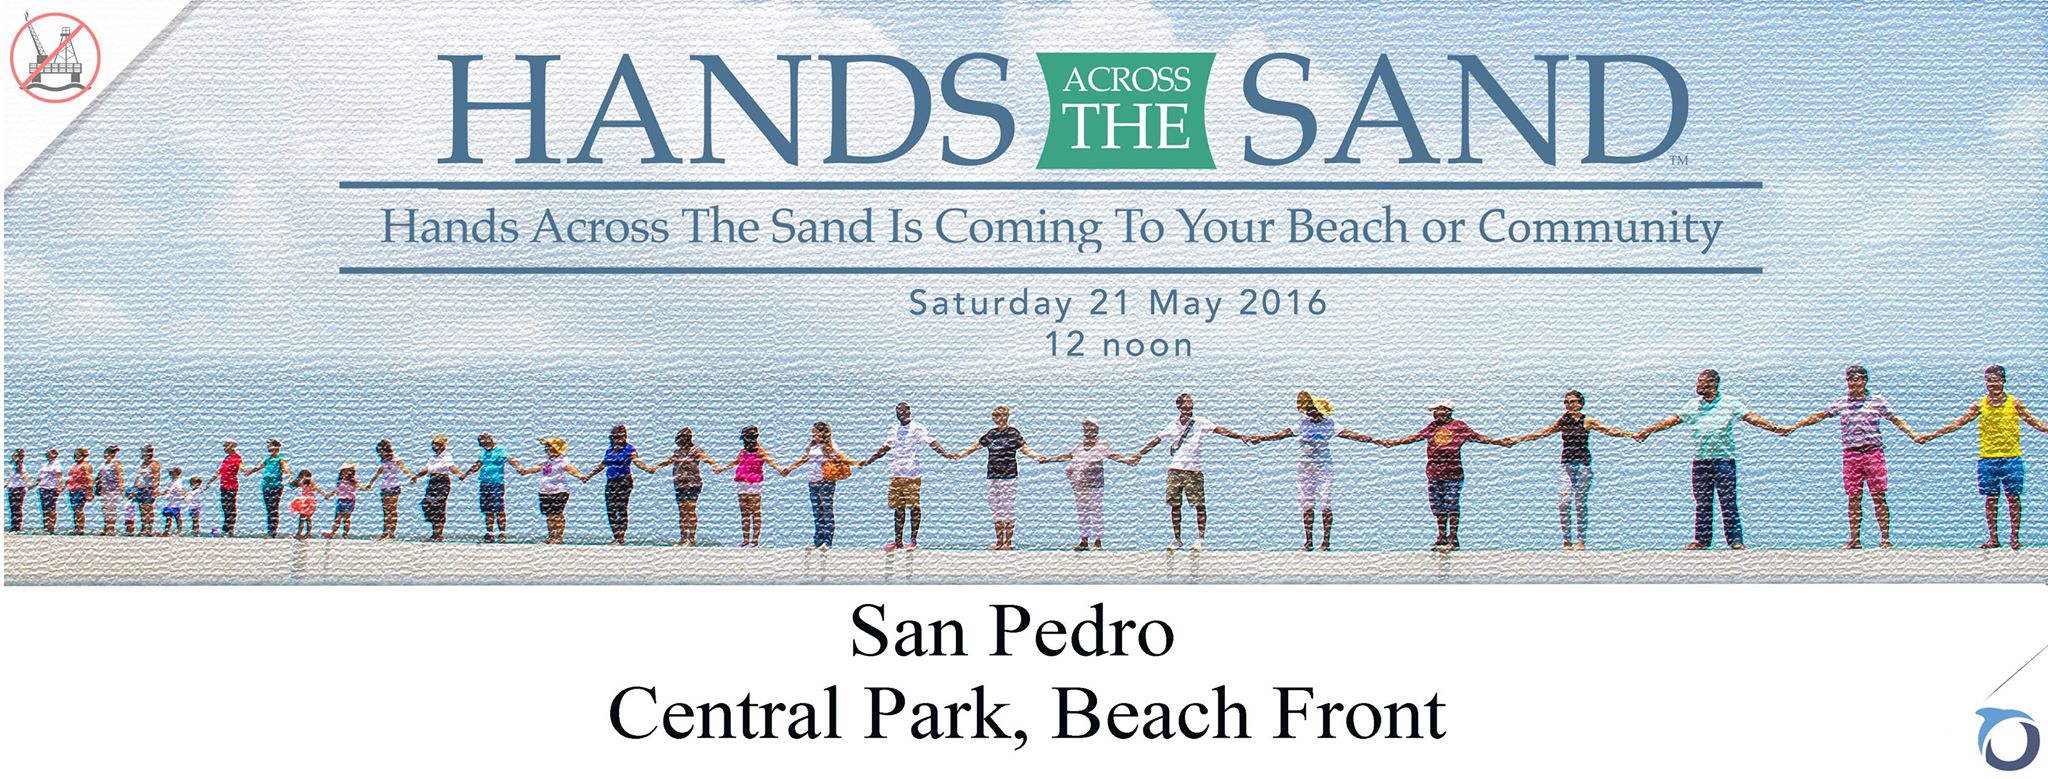 Hands across the sand